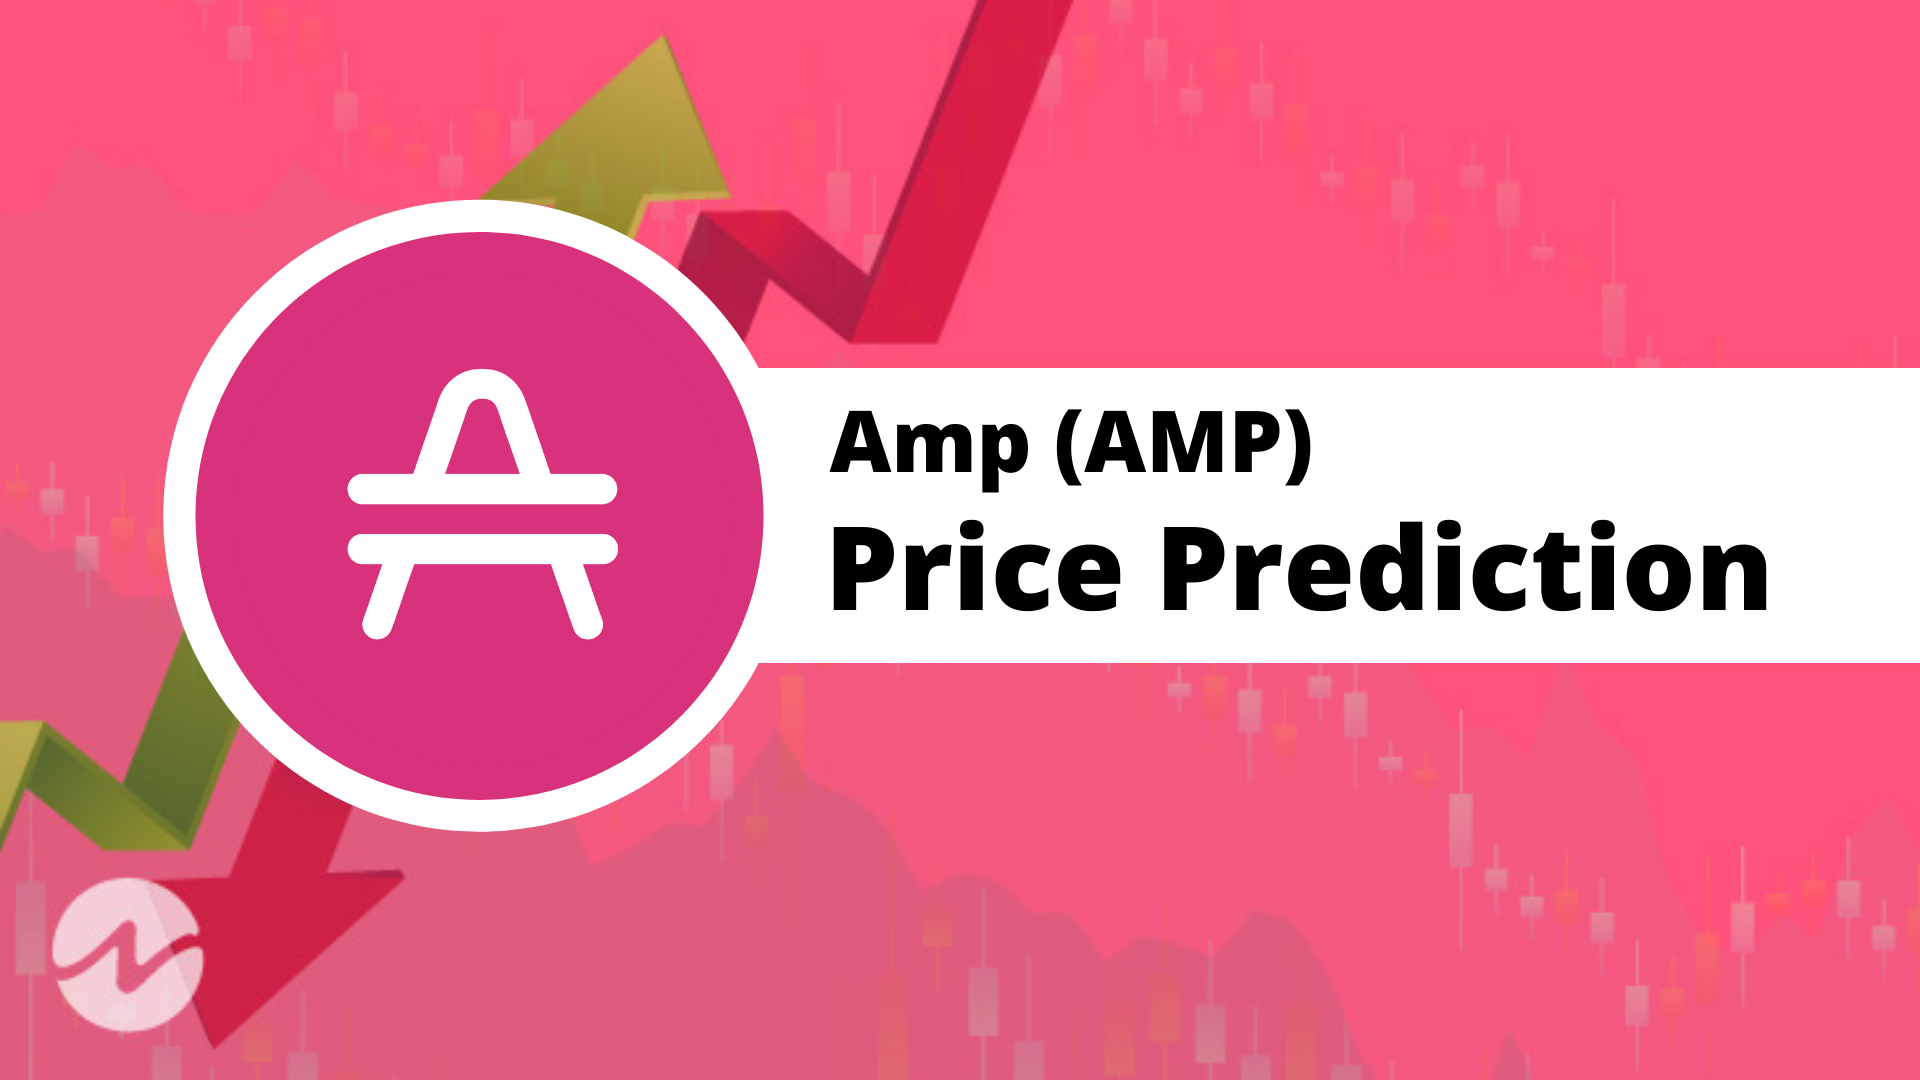 Amp (AMP) Price Prediction 2022 - Will AMP Hit $0.1 Soon?